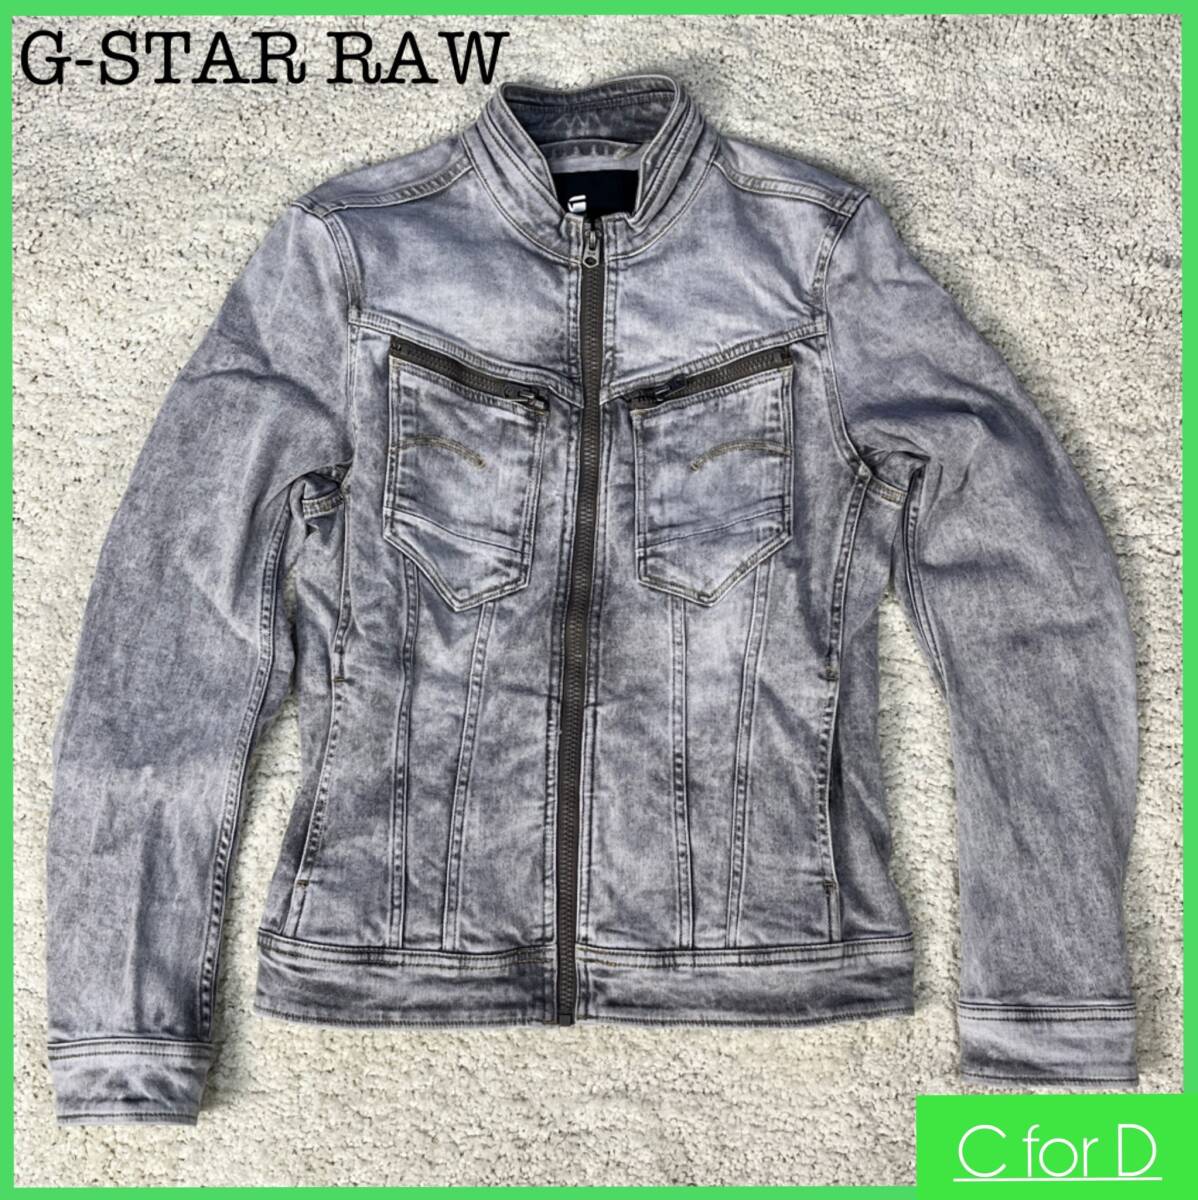  прекрасный товар *G-STAR RAW*XS размер Rider's Denim жакет ji- Star rou мужской серый жакет Single Rider's внешний J161